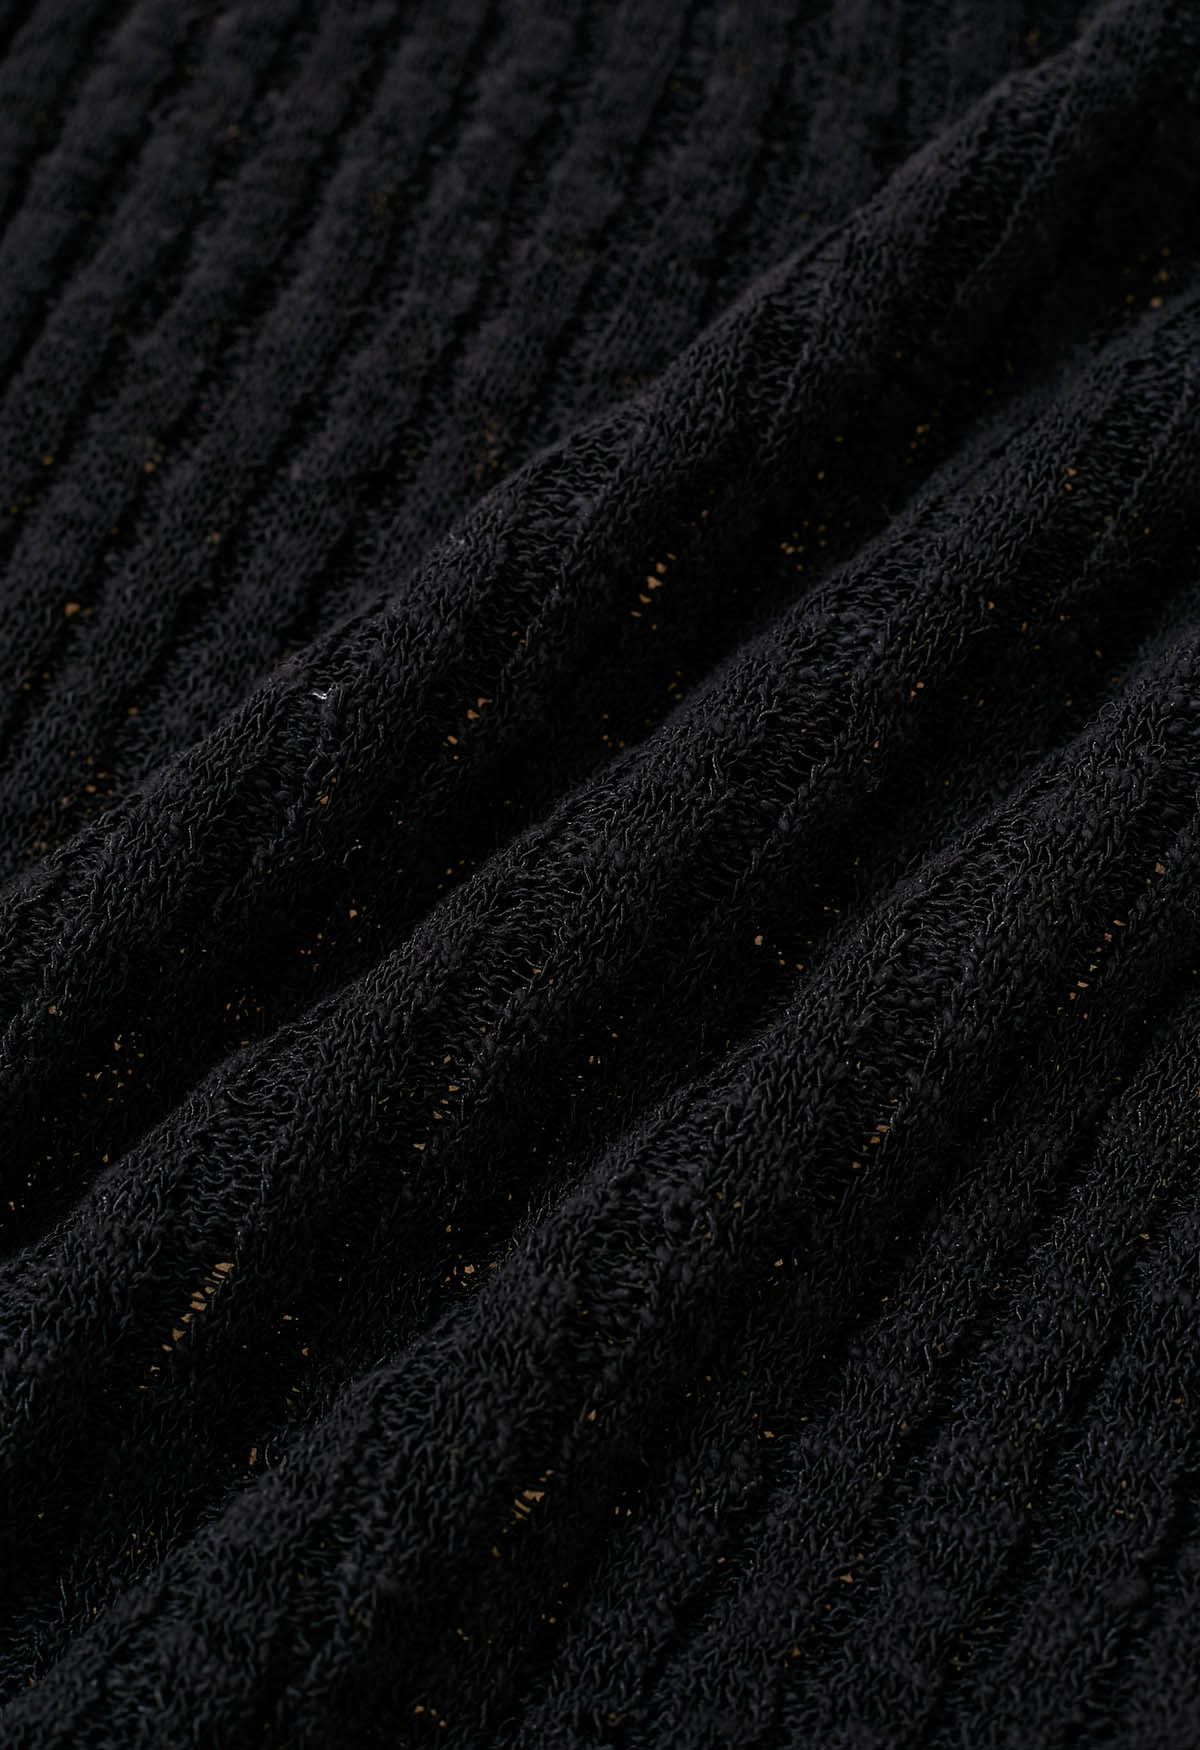 Basic Cap Sleeve Cotton Top in Black